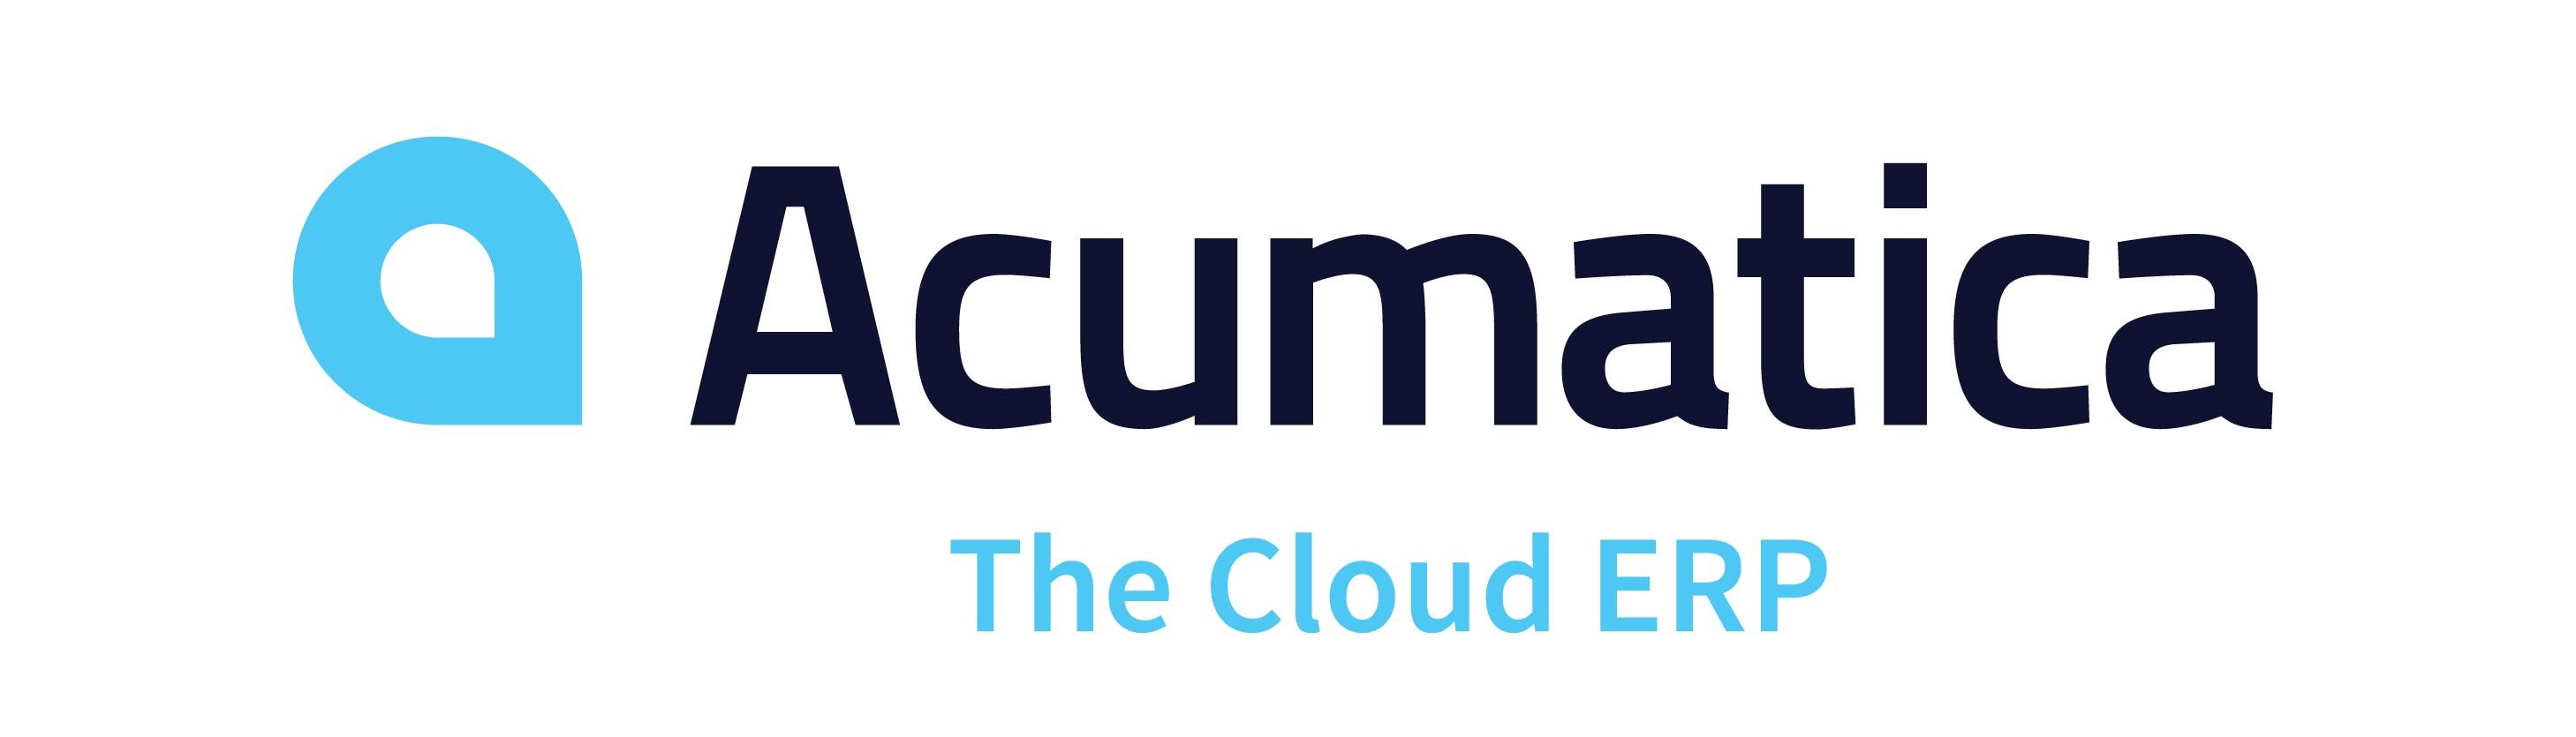 Acumatica Logo - Acumatica Logo Malta Events : Finance Malta Events